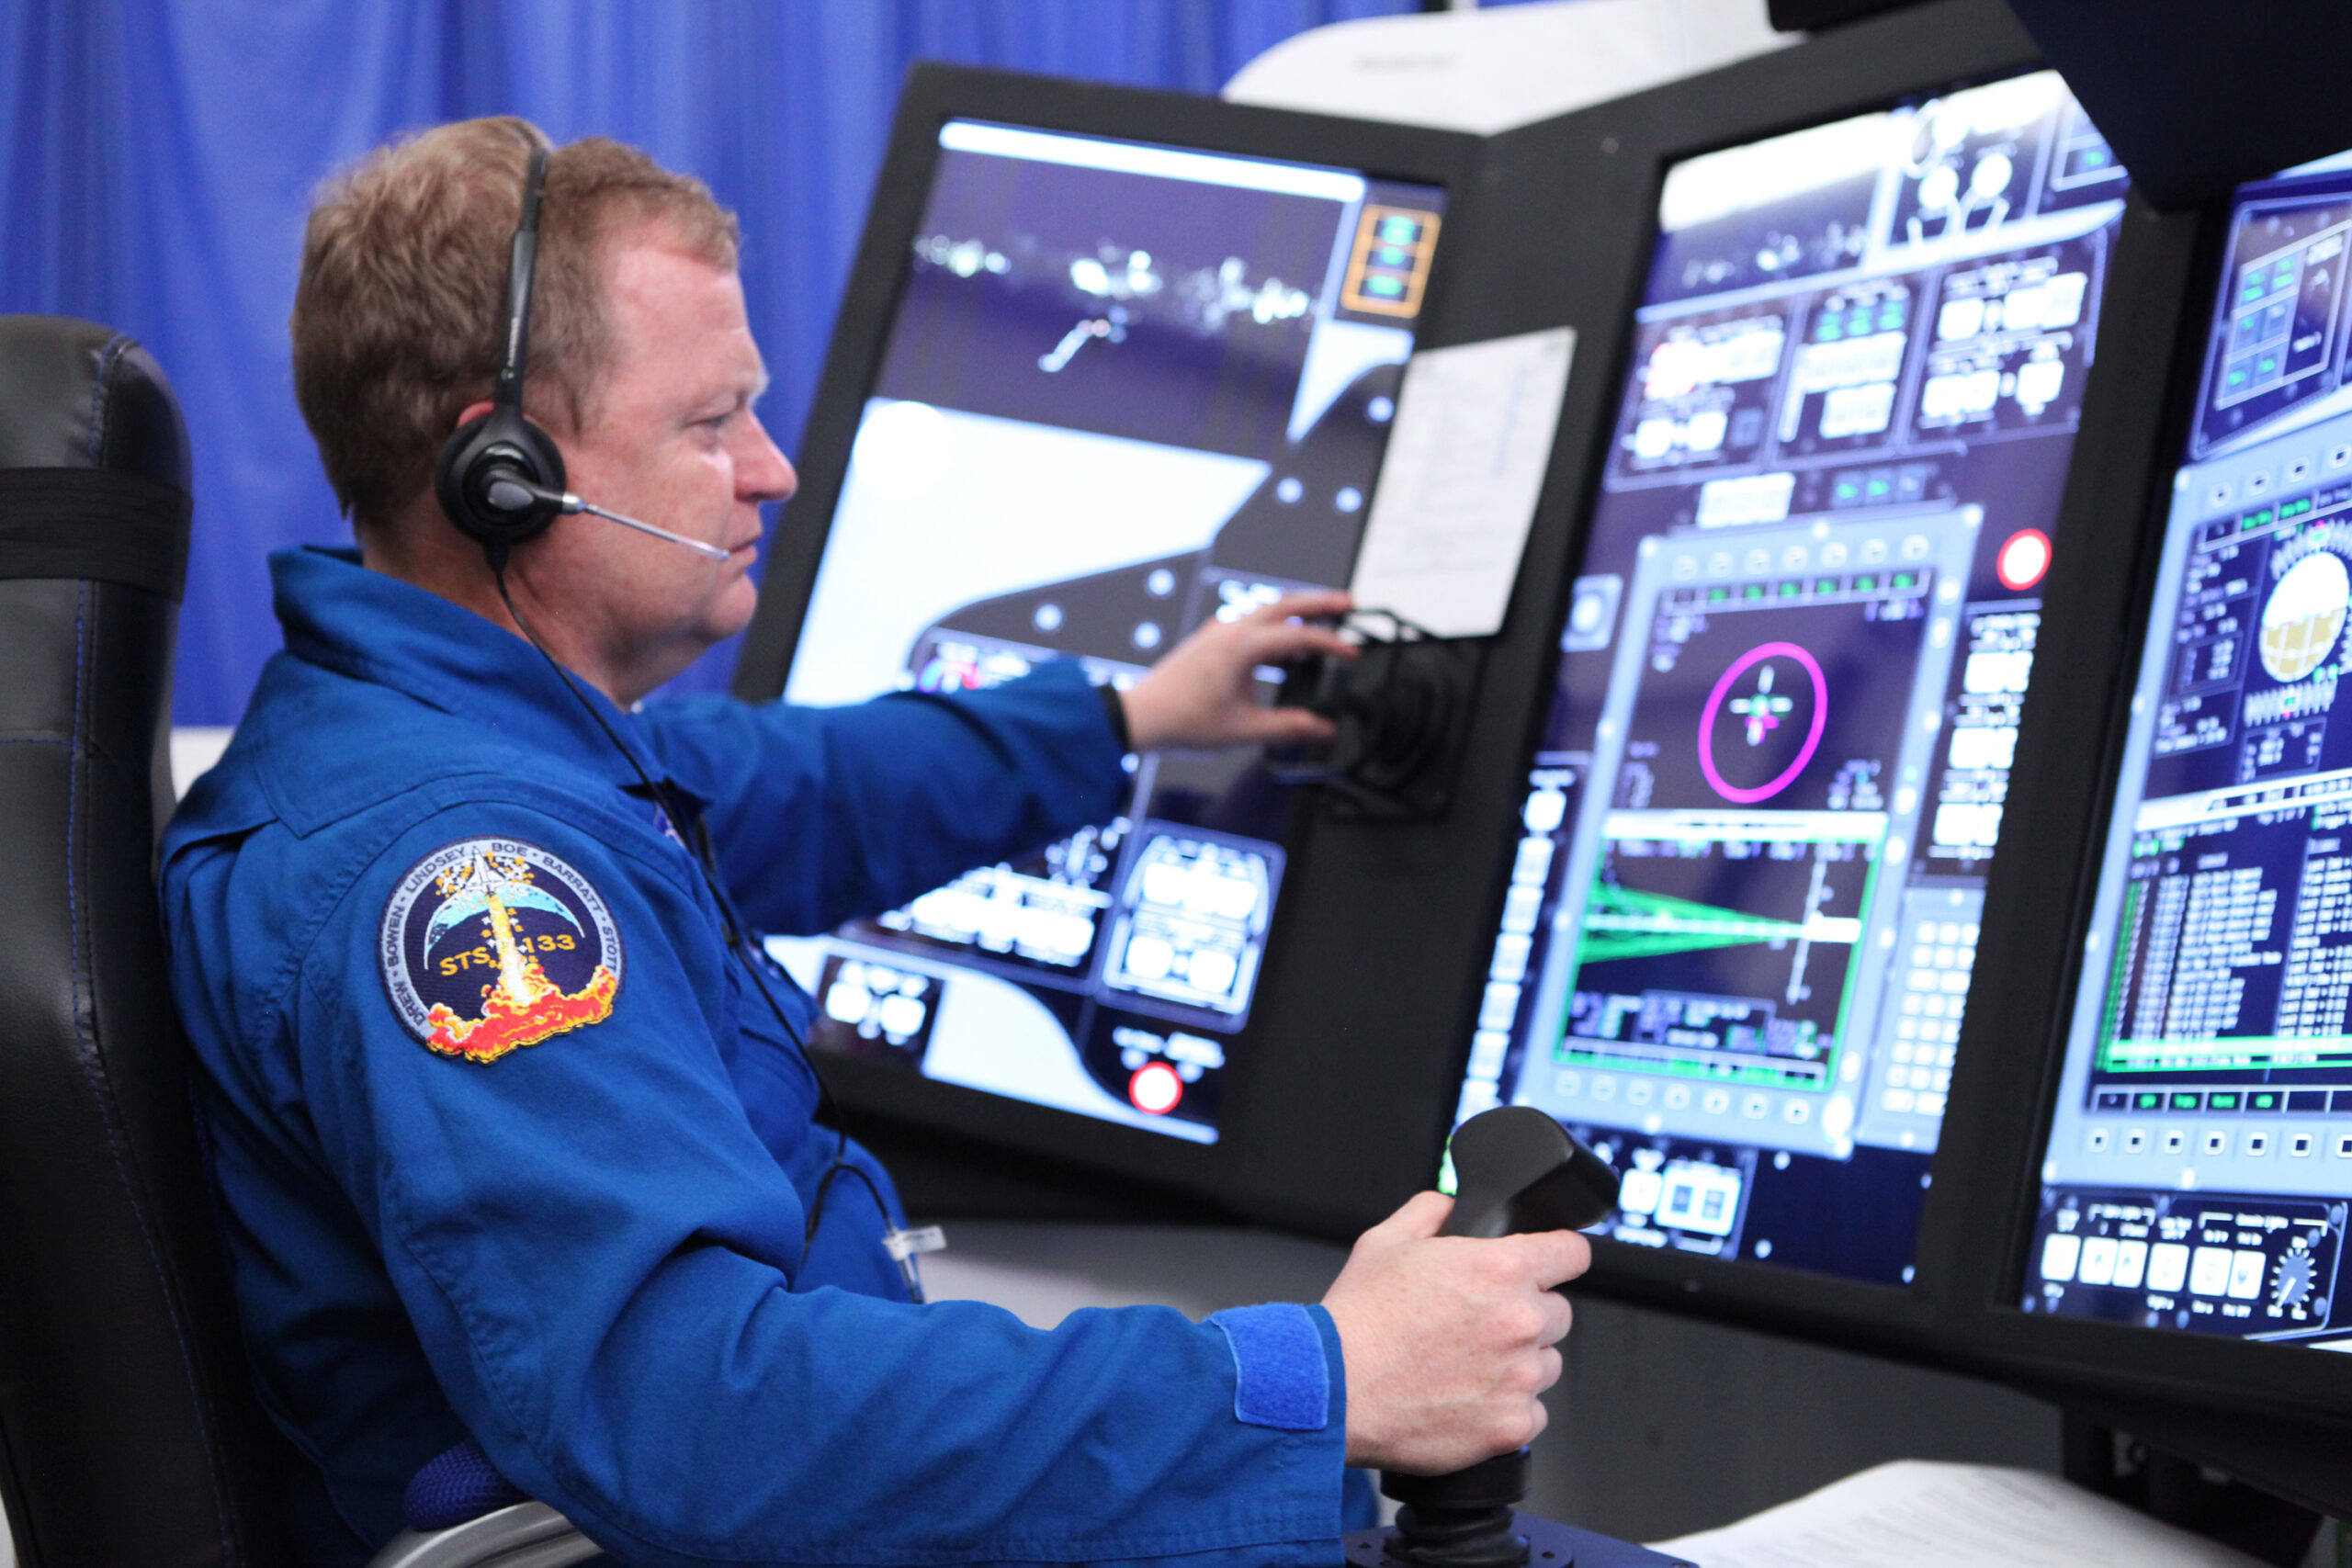 NASA Finally Has Touchscreen Simulators For Spacecraft